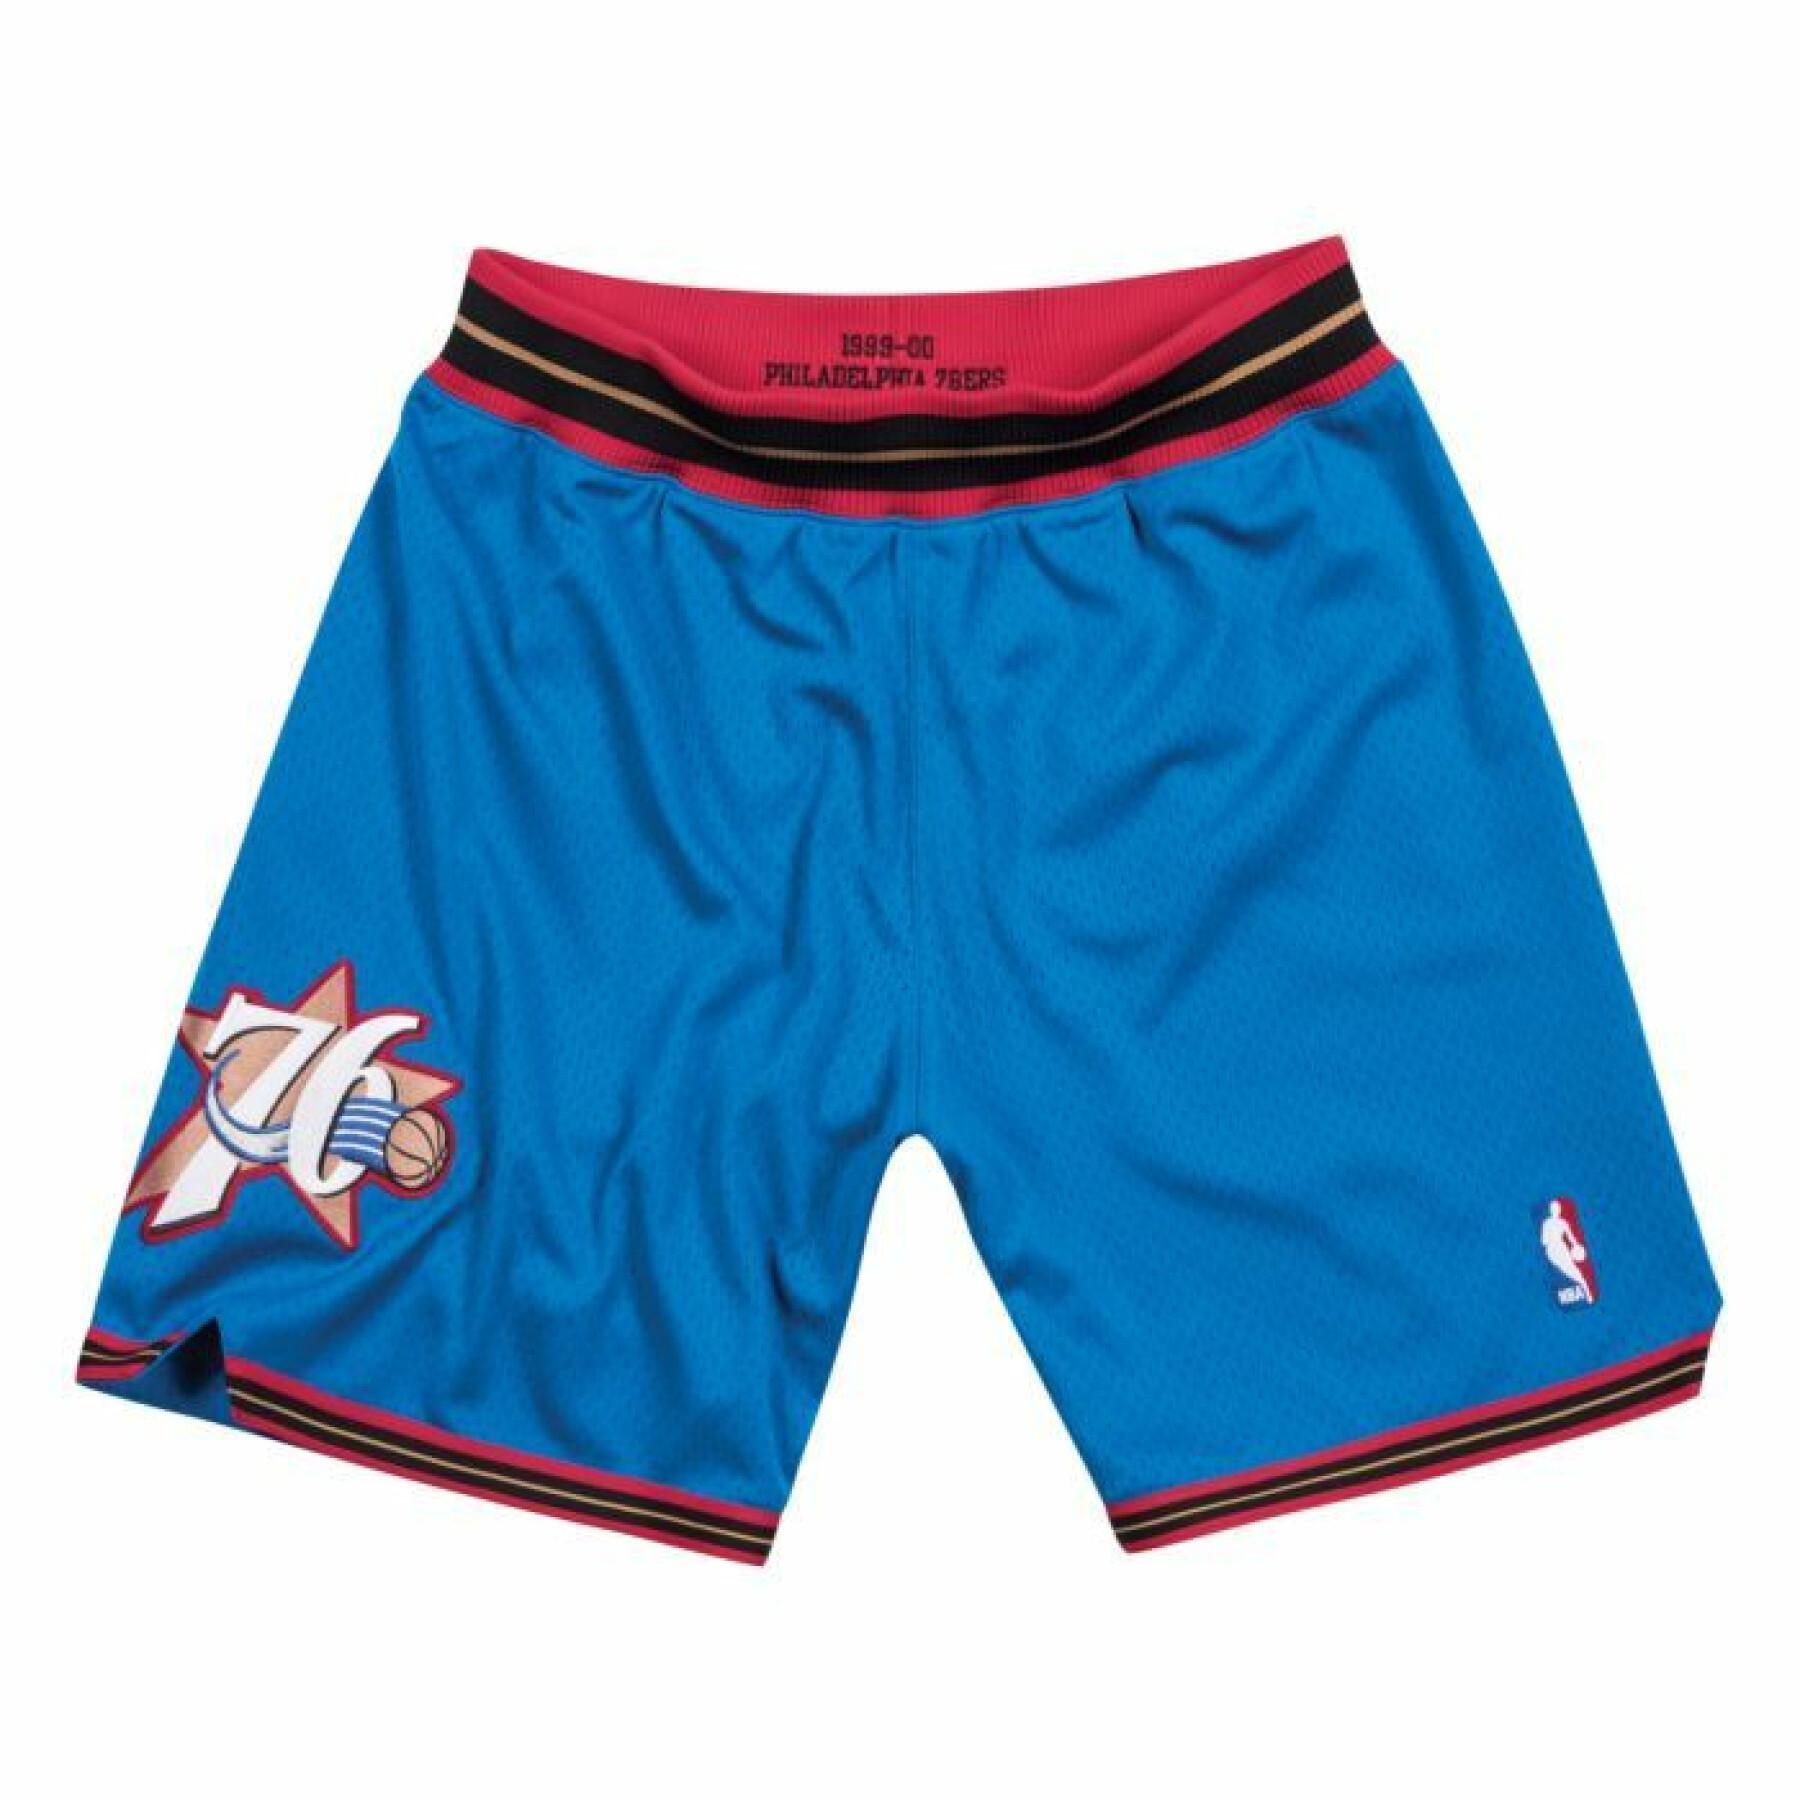 Pantalones cortos Philadelphia 76ers 1999-00 Authentic 